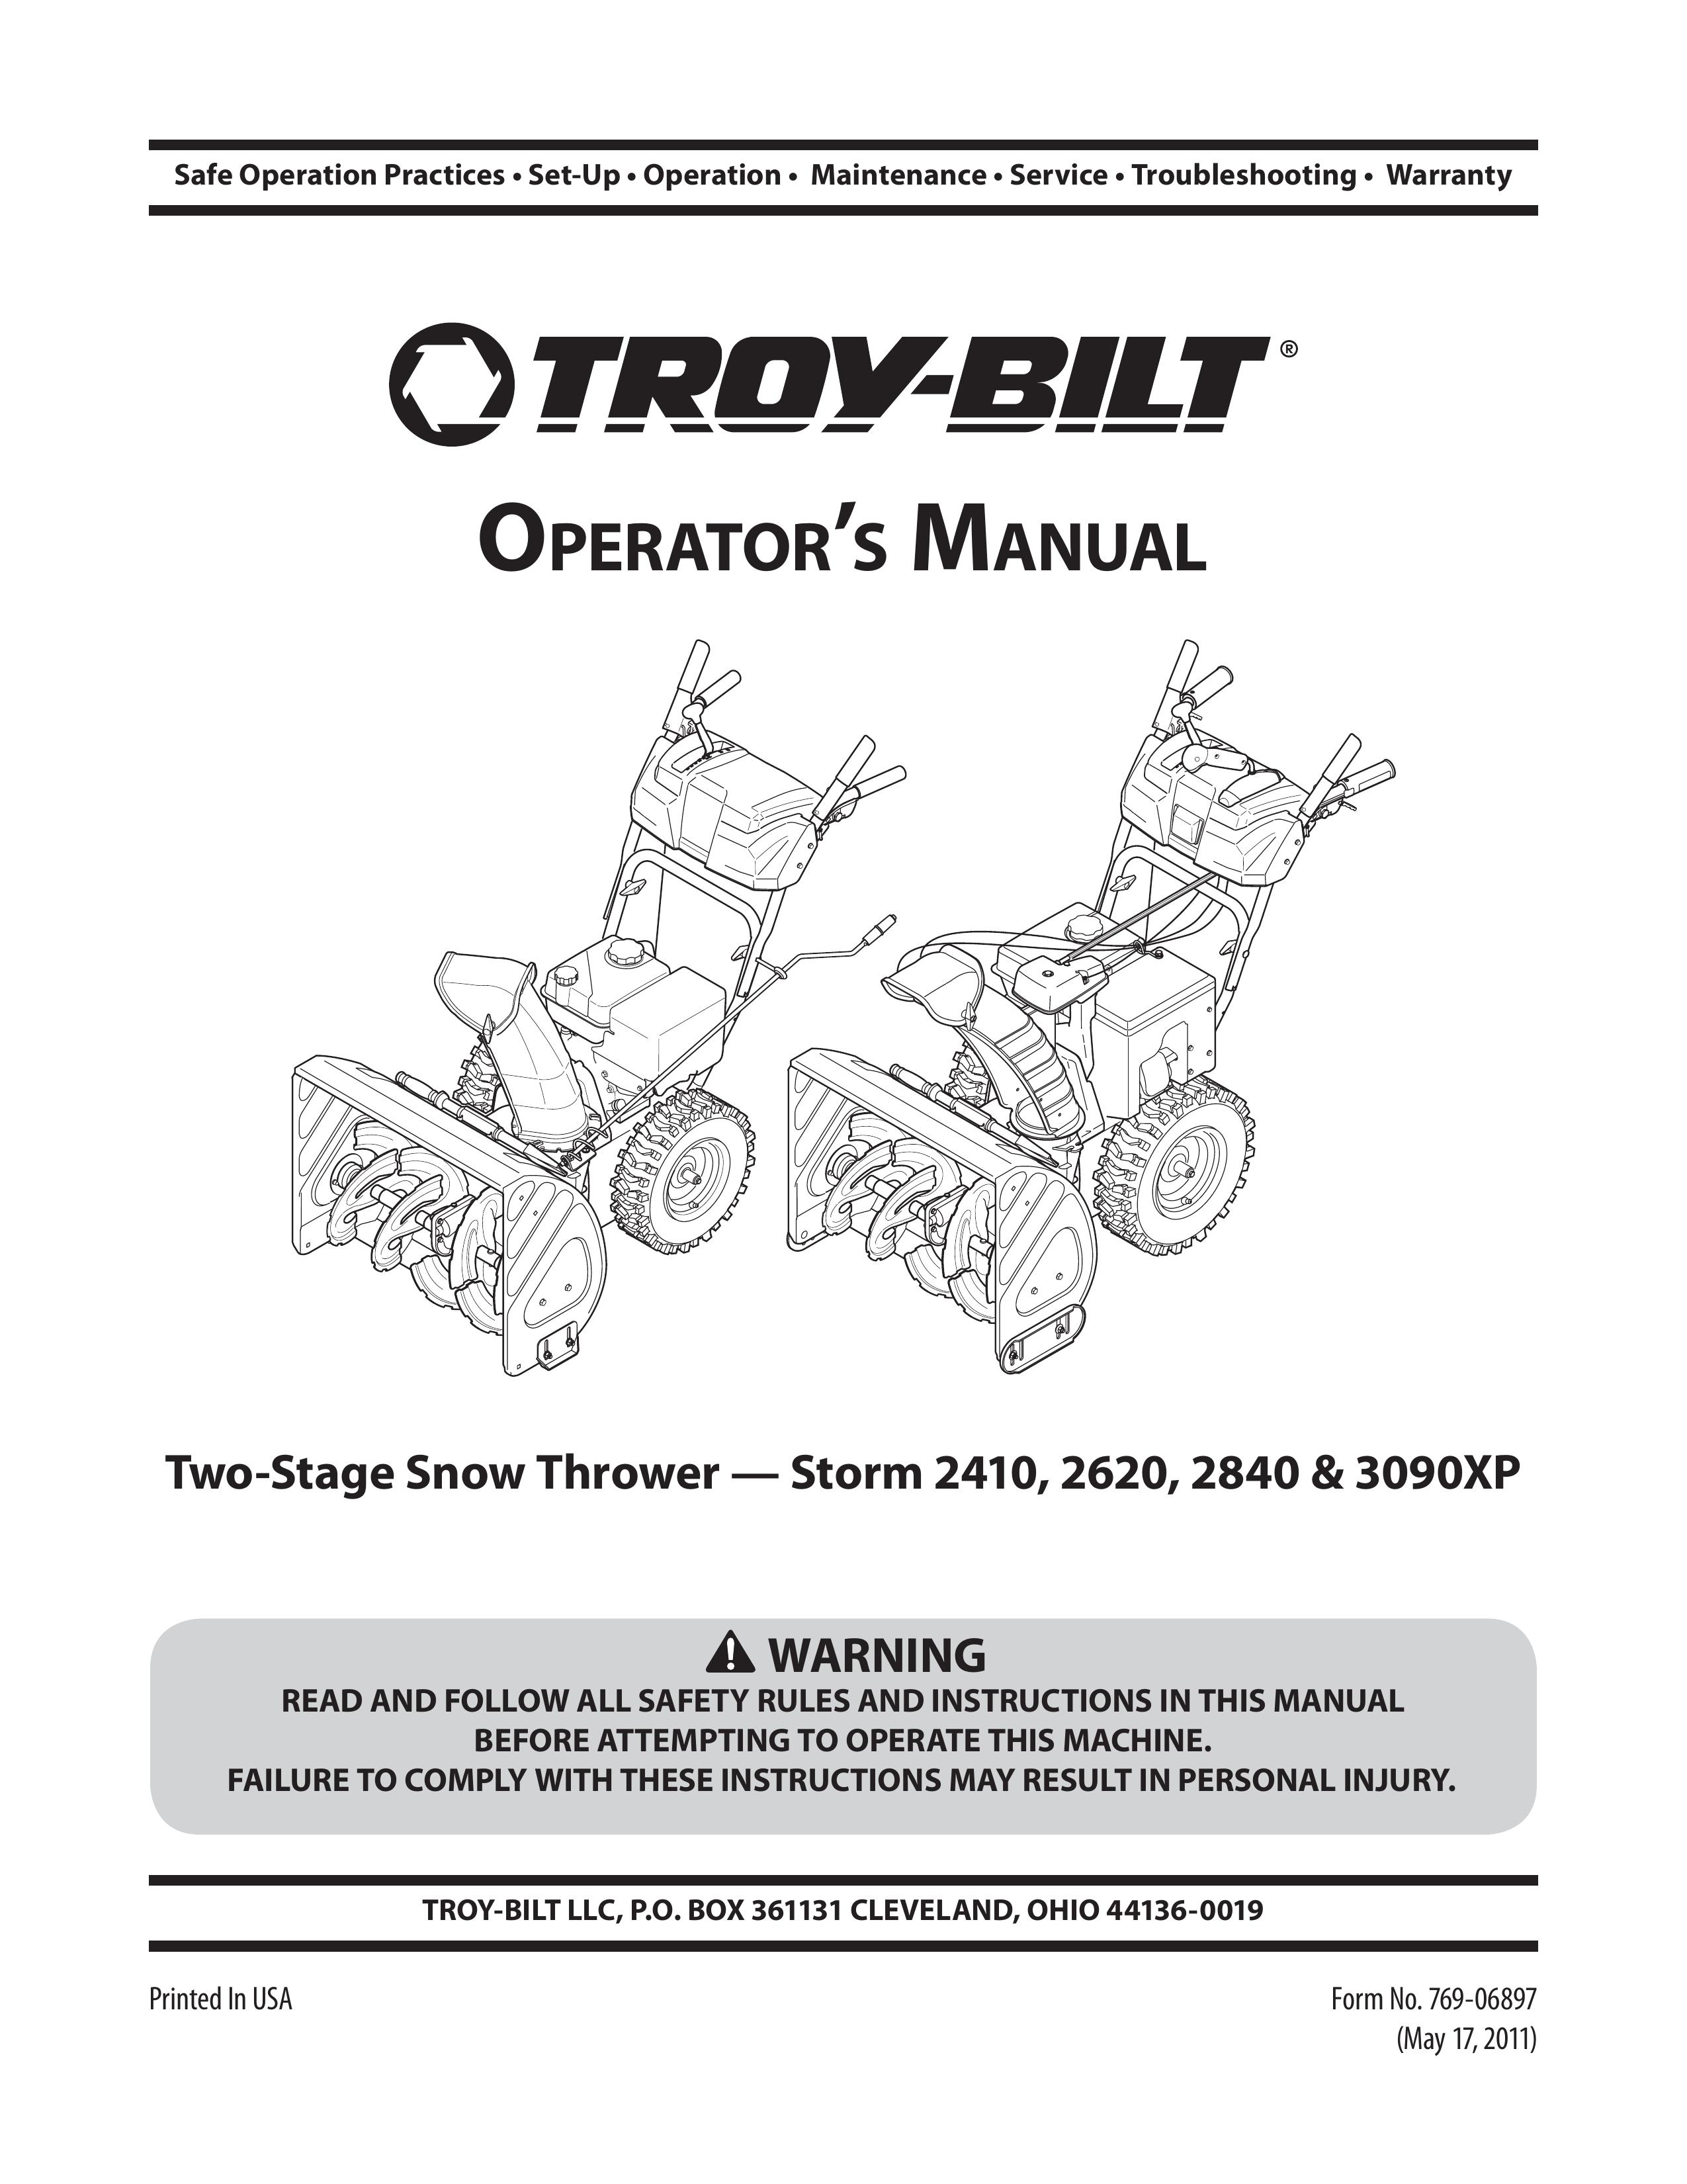 Troy-Bilt 3090XP Snow Blower User Manual